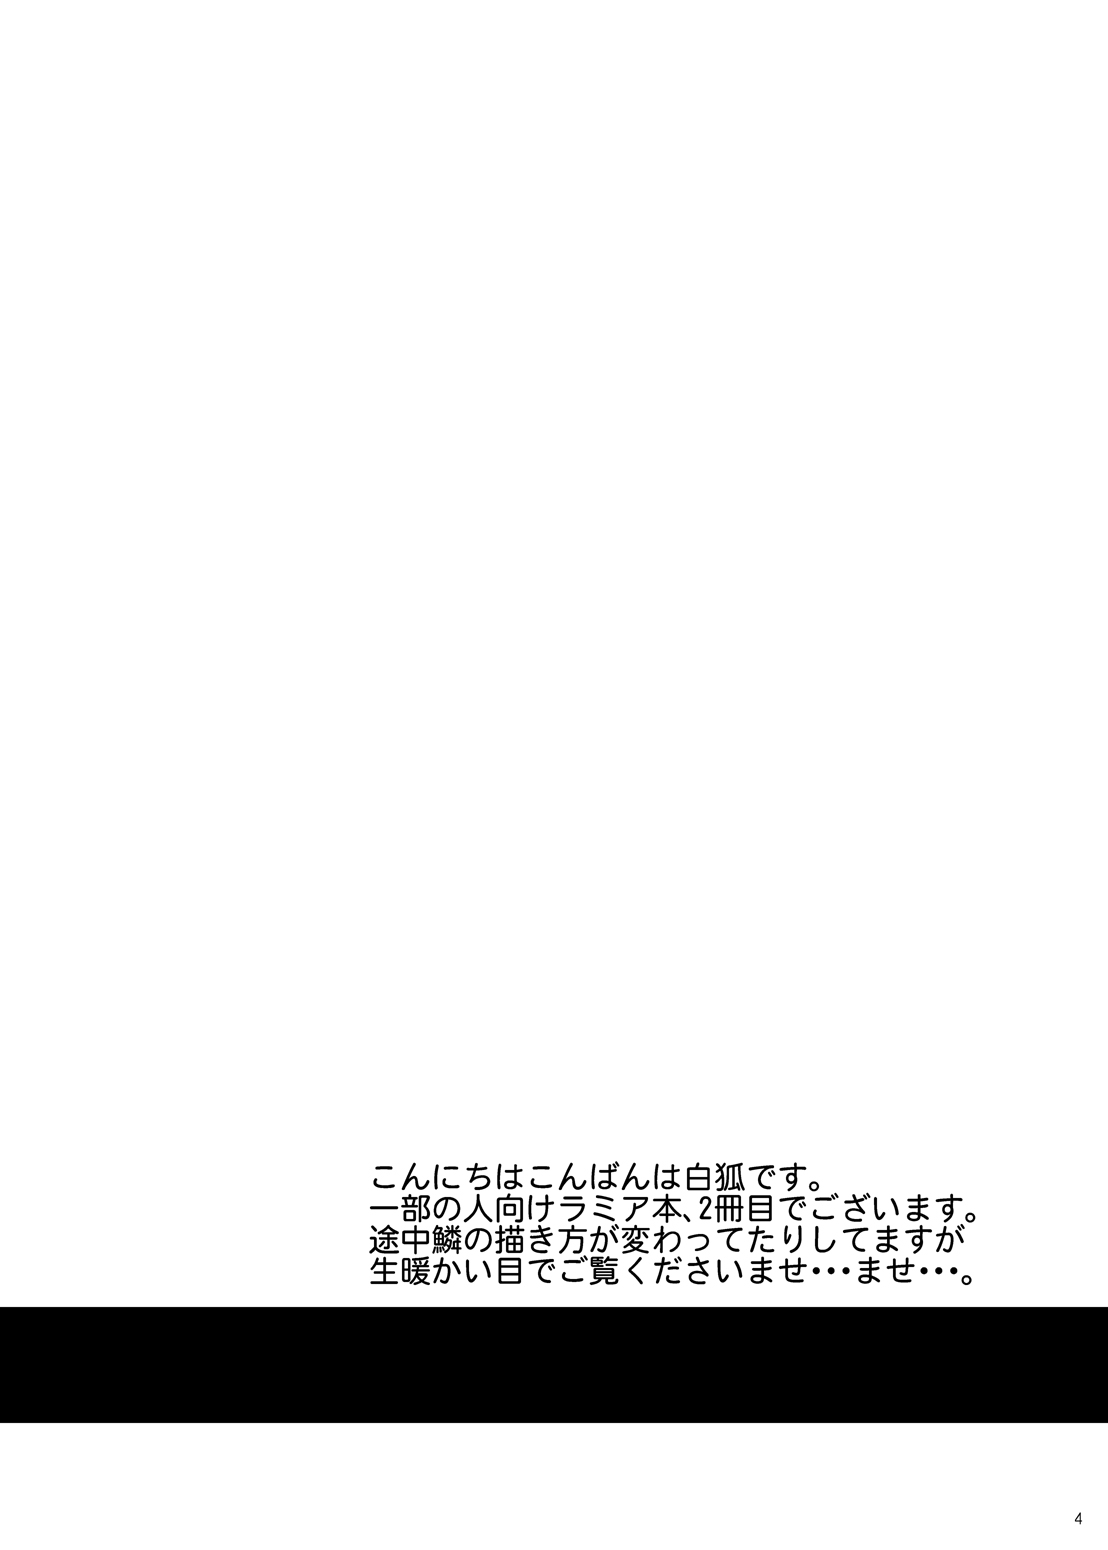 [SeaFox (霧咲白狐)] MONSTER CROSS 2nd [英訳] [DL版]